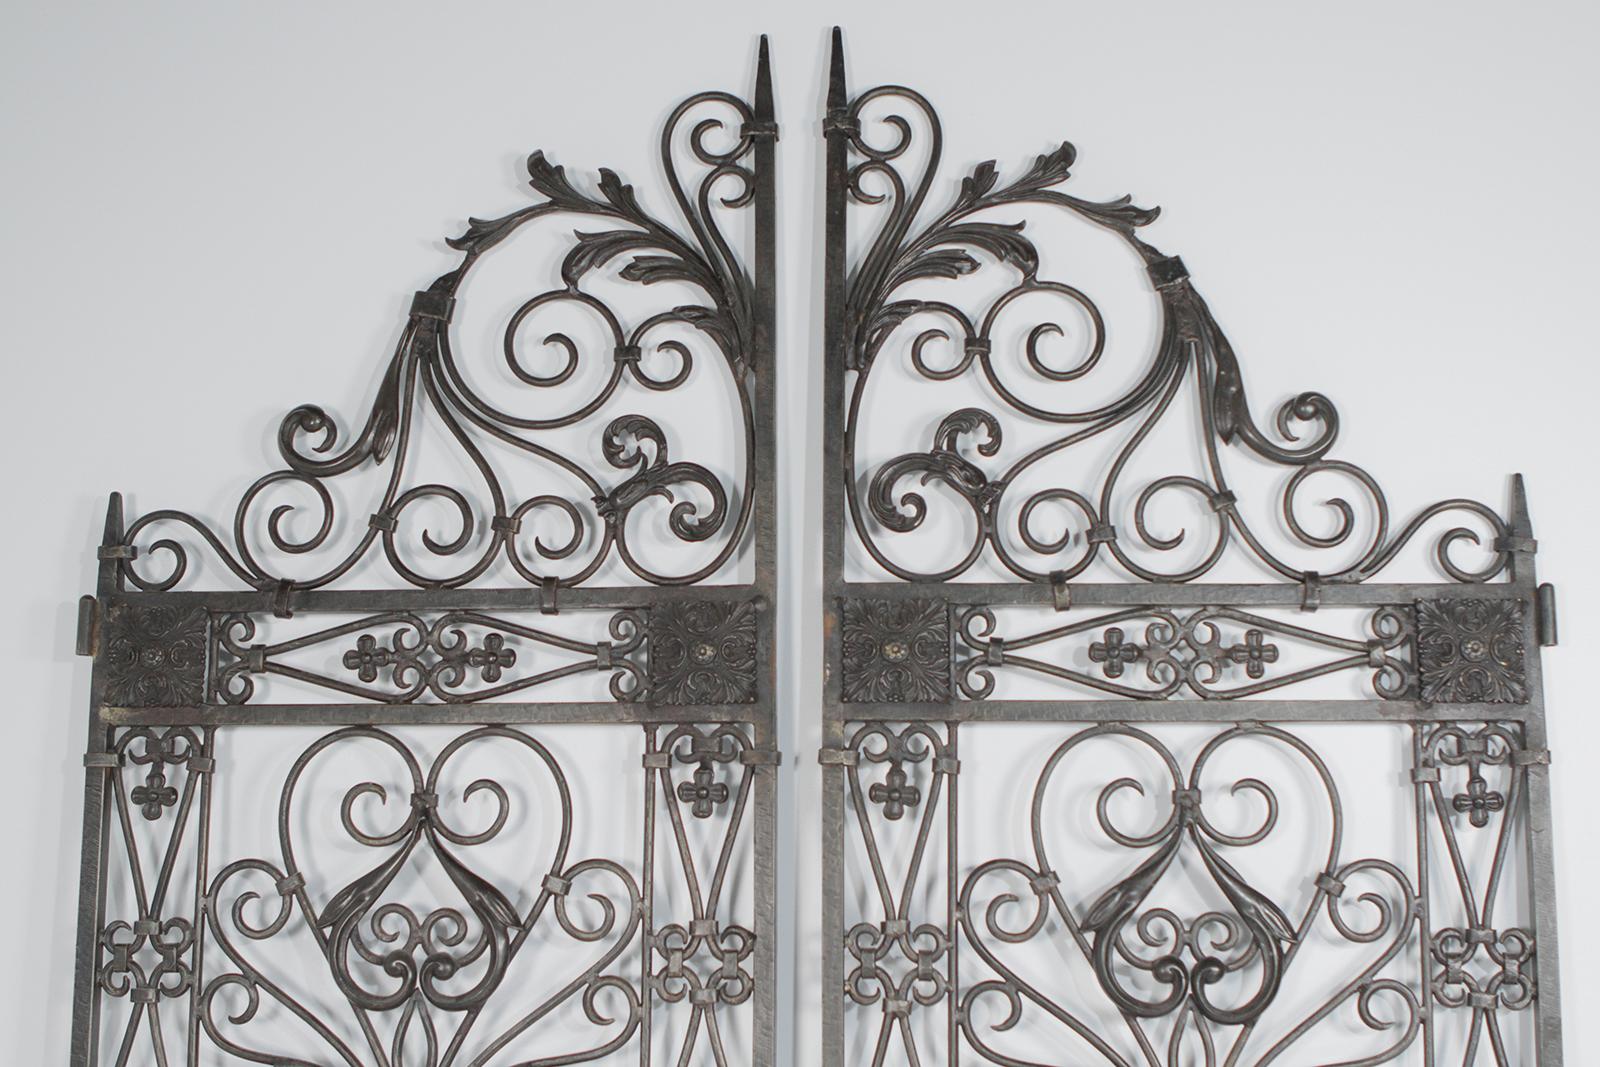 Super Impressive Pair of European Hand Wrought Iron Ornate Architectural Gates 1